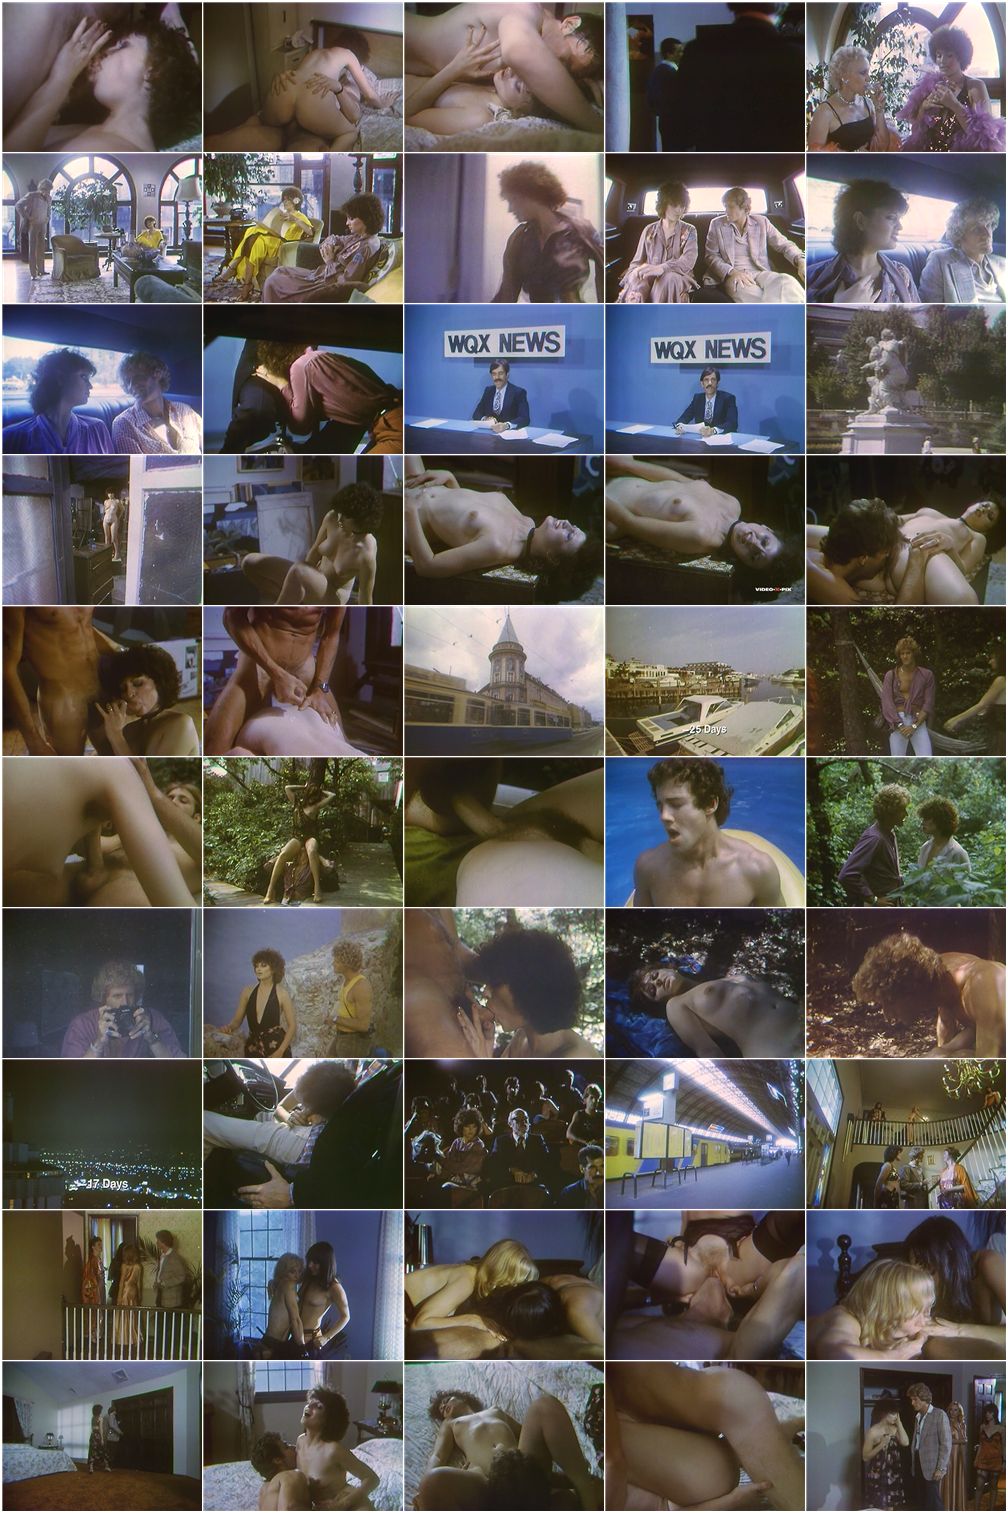   /Bon Appetit/ Video X Pix (1980)   